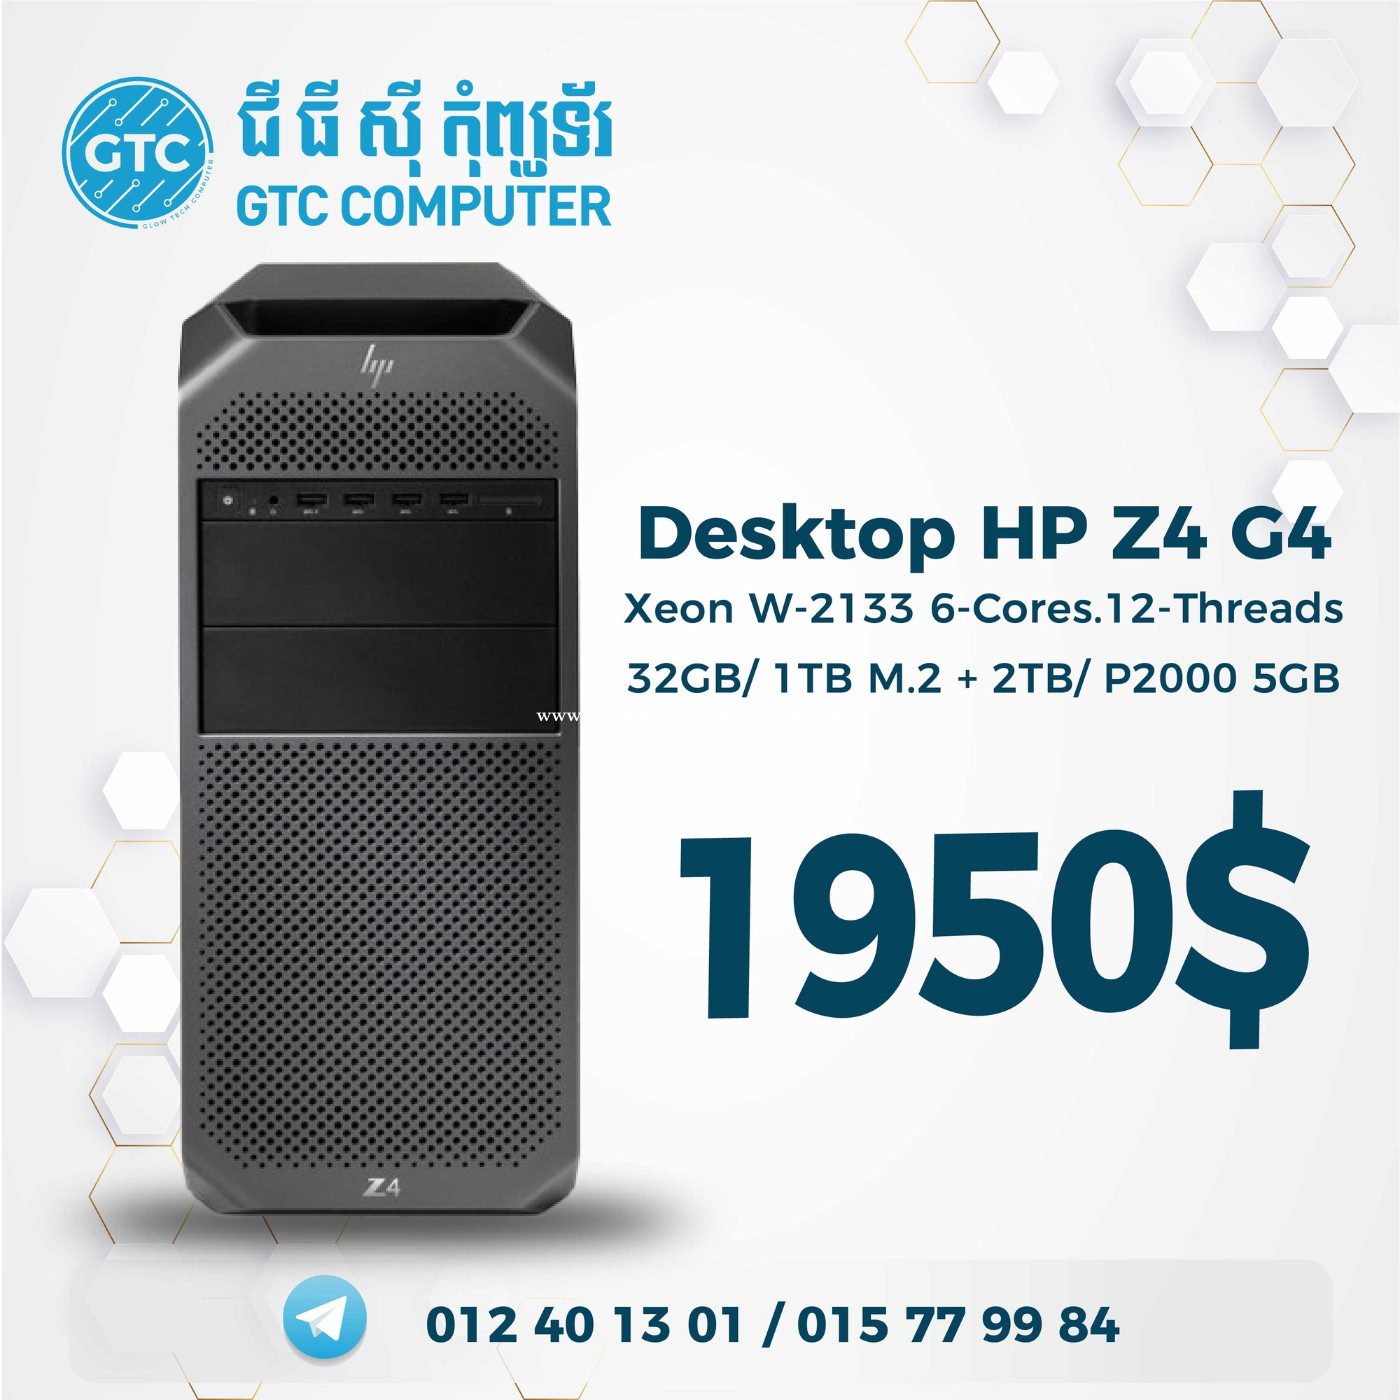 Desktop HP Z4 G4 Xeon W-2133 6-Cores.12-Threads 32GB/1TB M.2 + 2TB